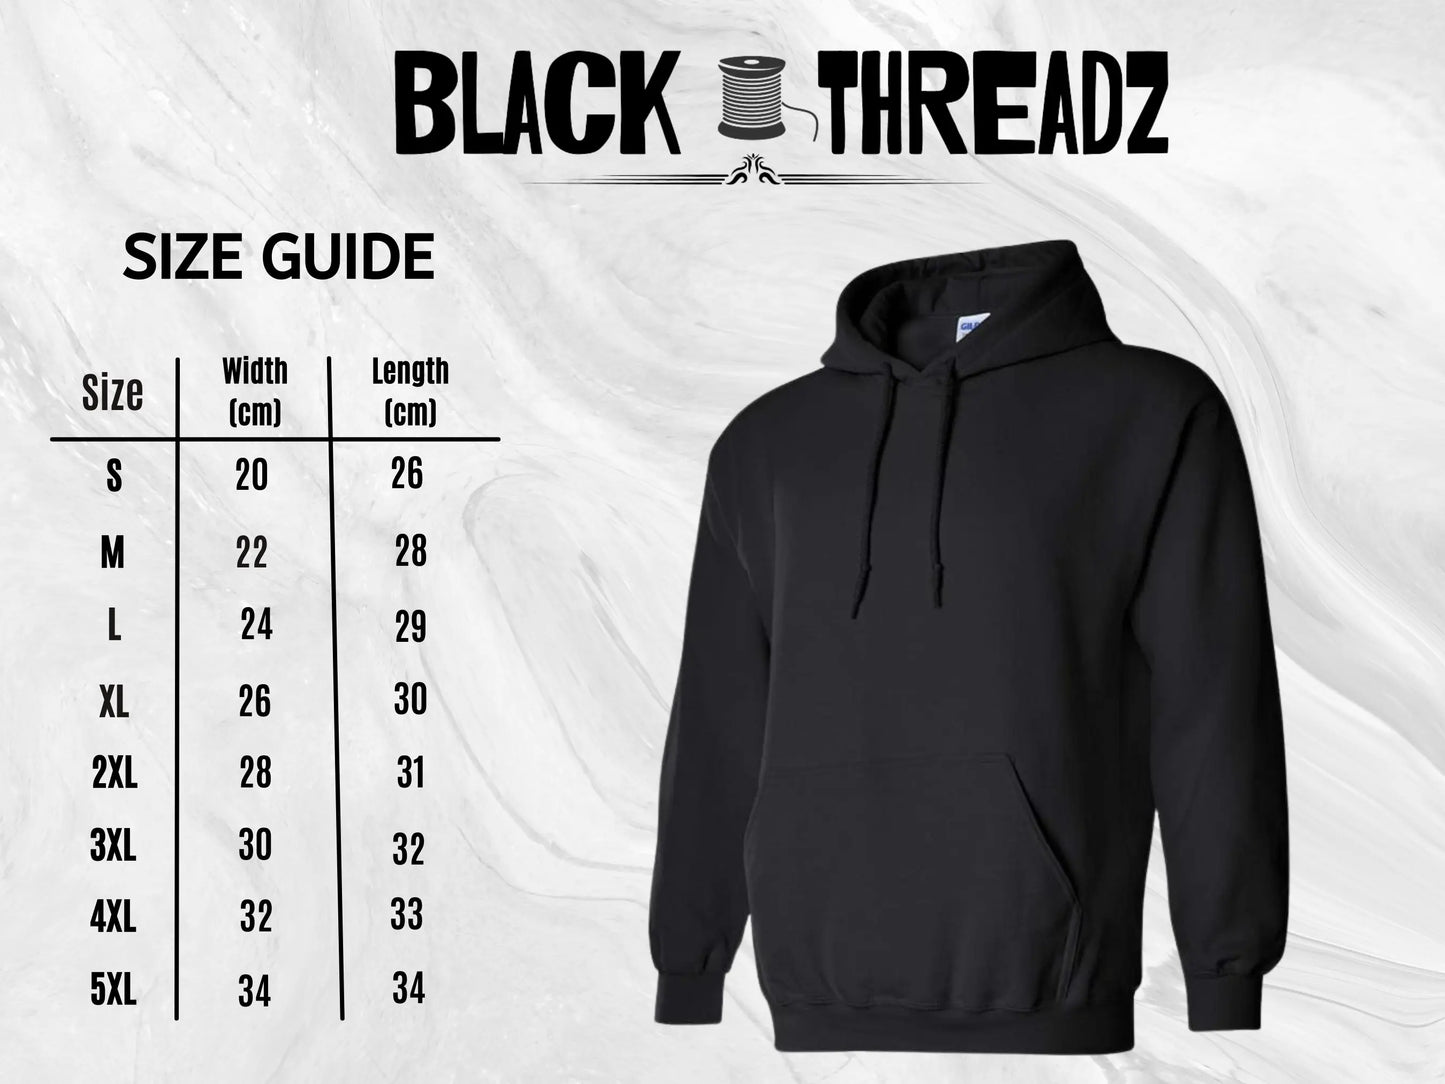 Timeless Style: Multicolored Retro Air Jordan's Black Hoodie - Air Jordan Gifts - Air Jordan Merchandise - Black Threadz